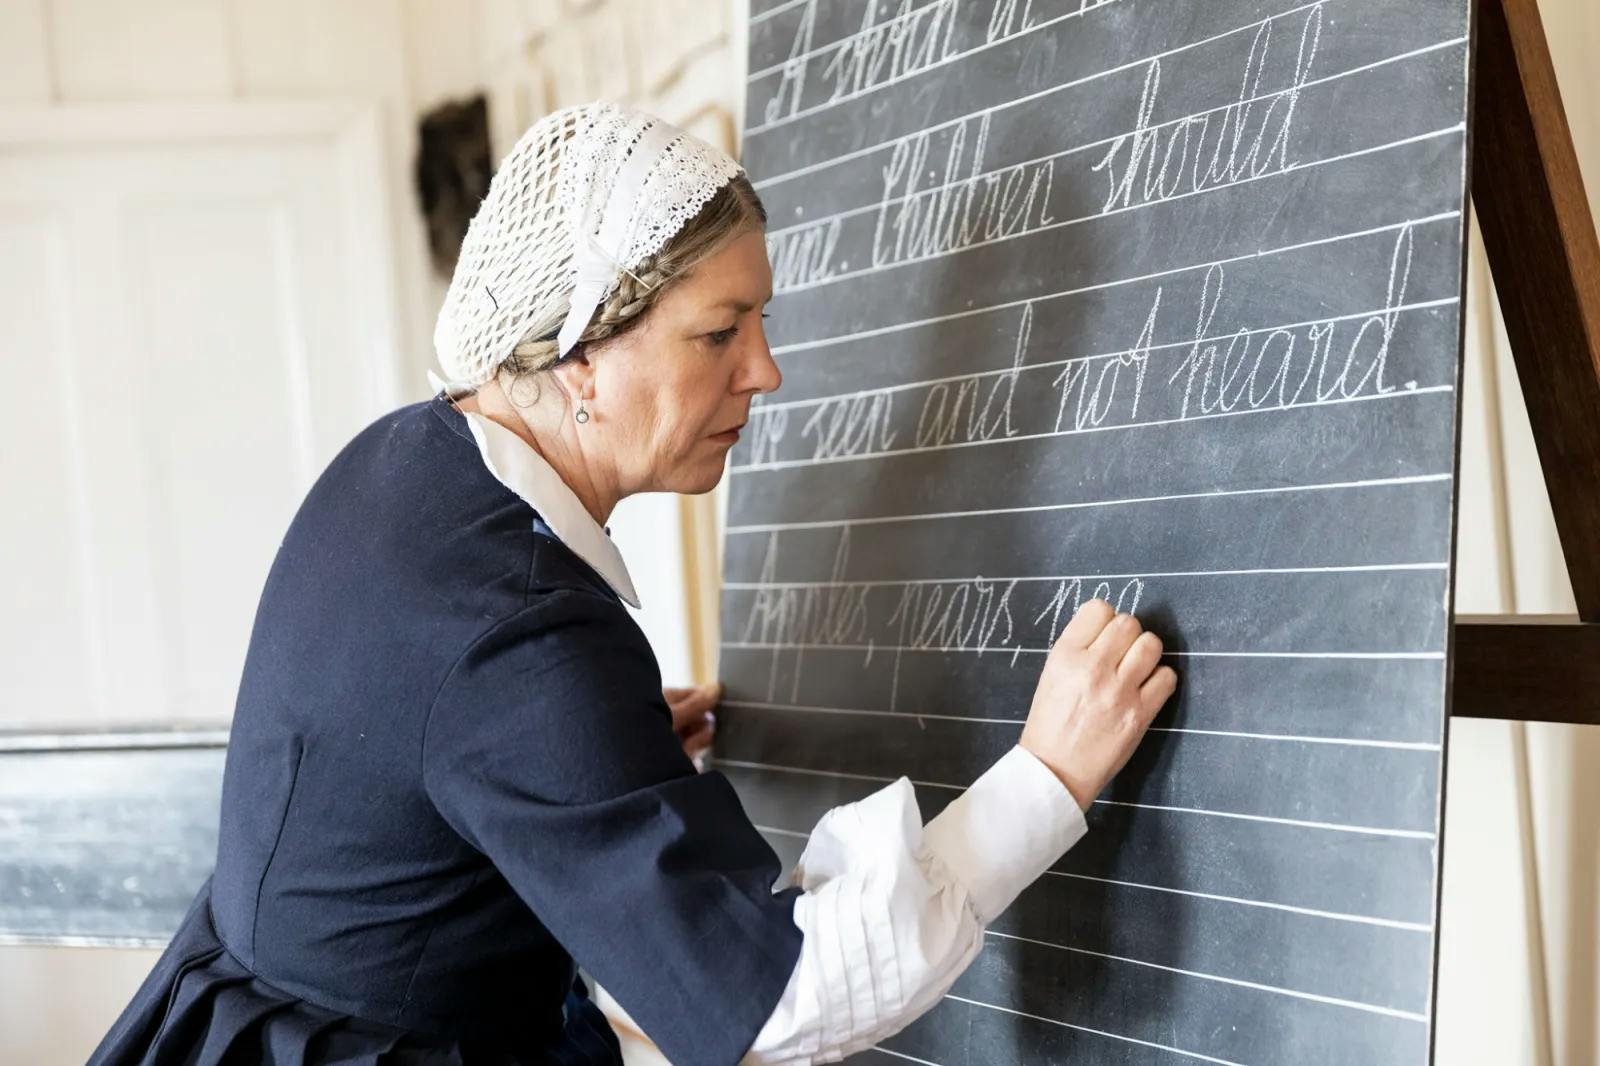 Woman writing on chalk board